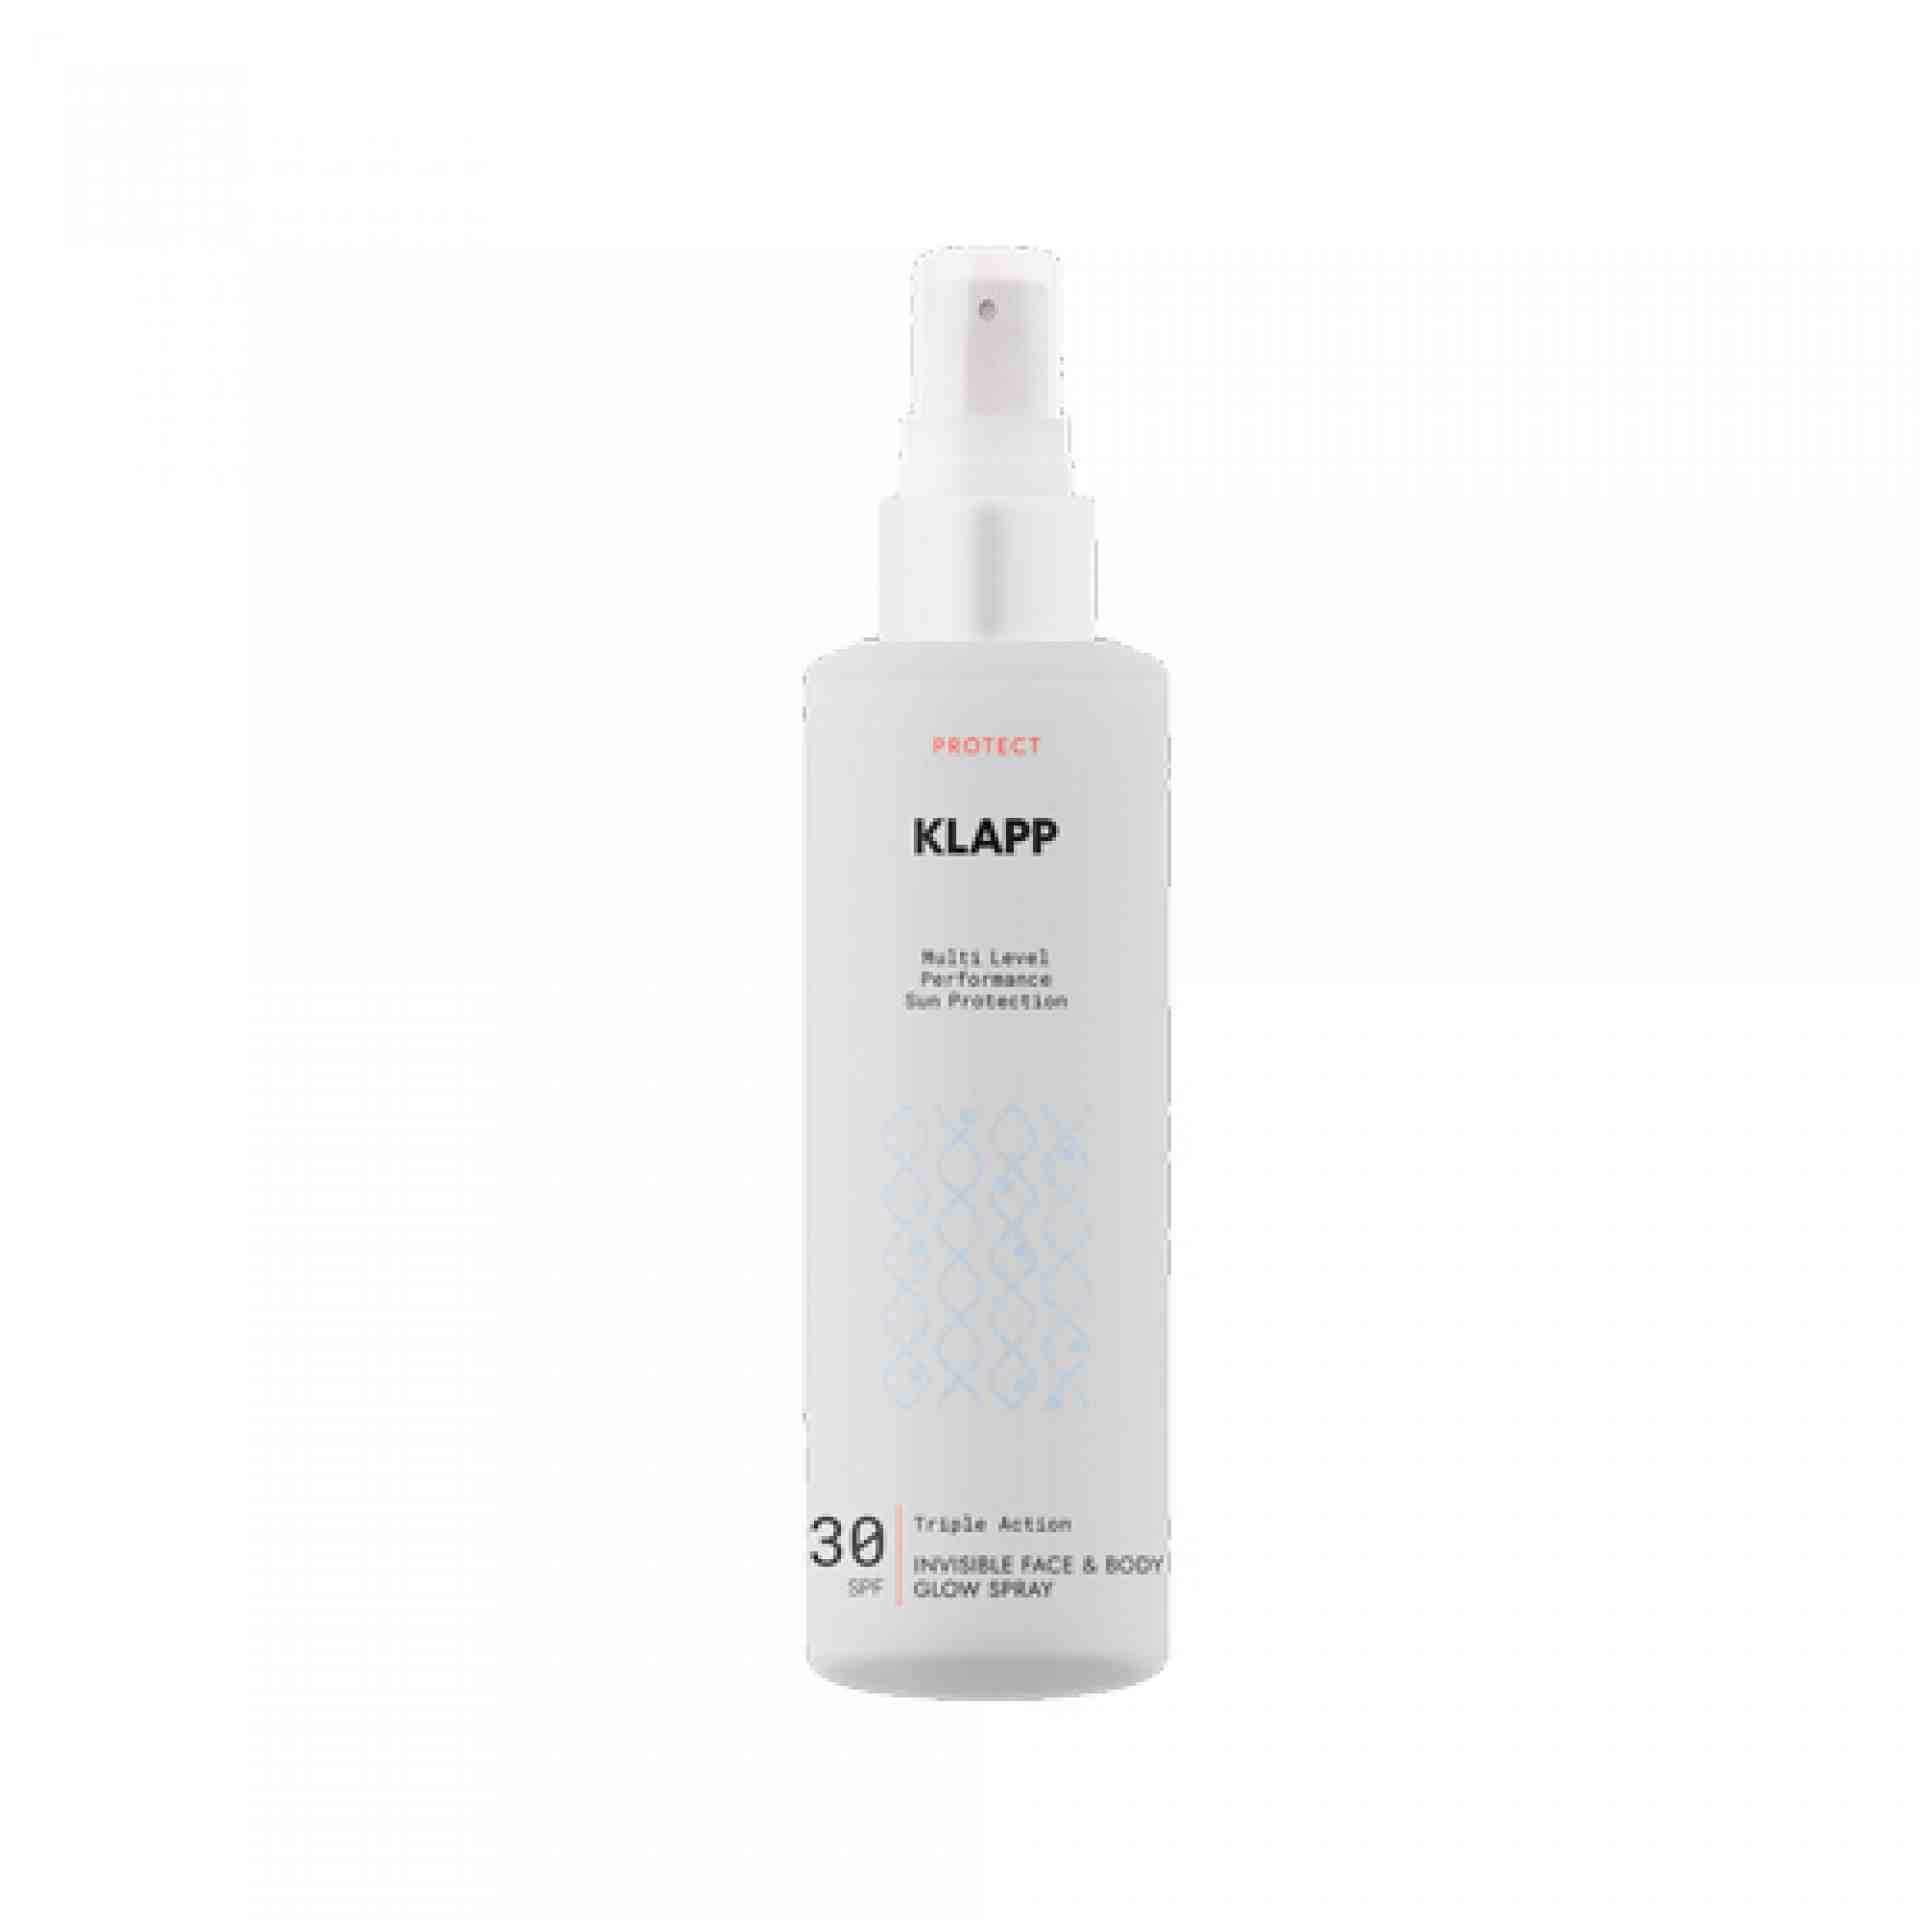 Triple Action Invisible Face & Body Glow Spray 30 SPF | Spray solar 200 ml - Protect - Klapp ®